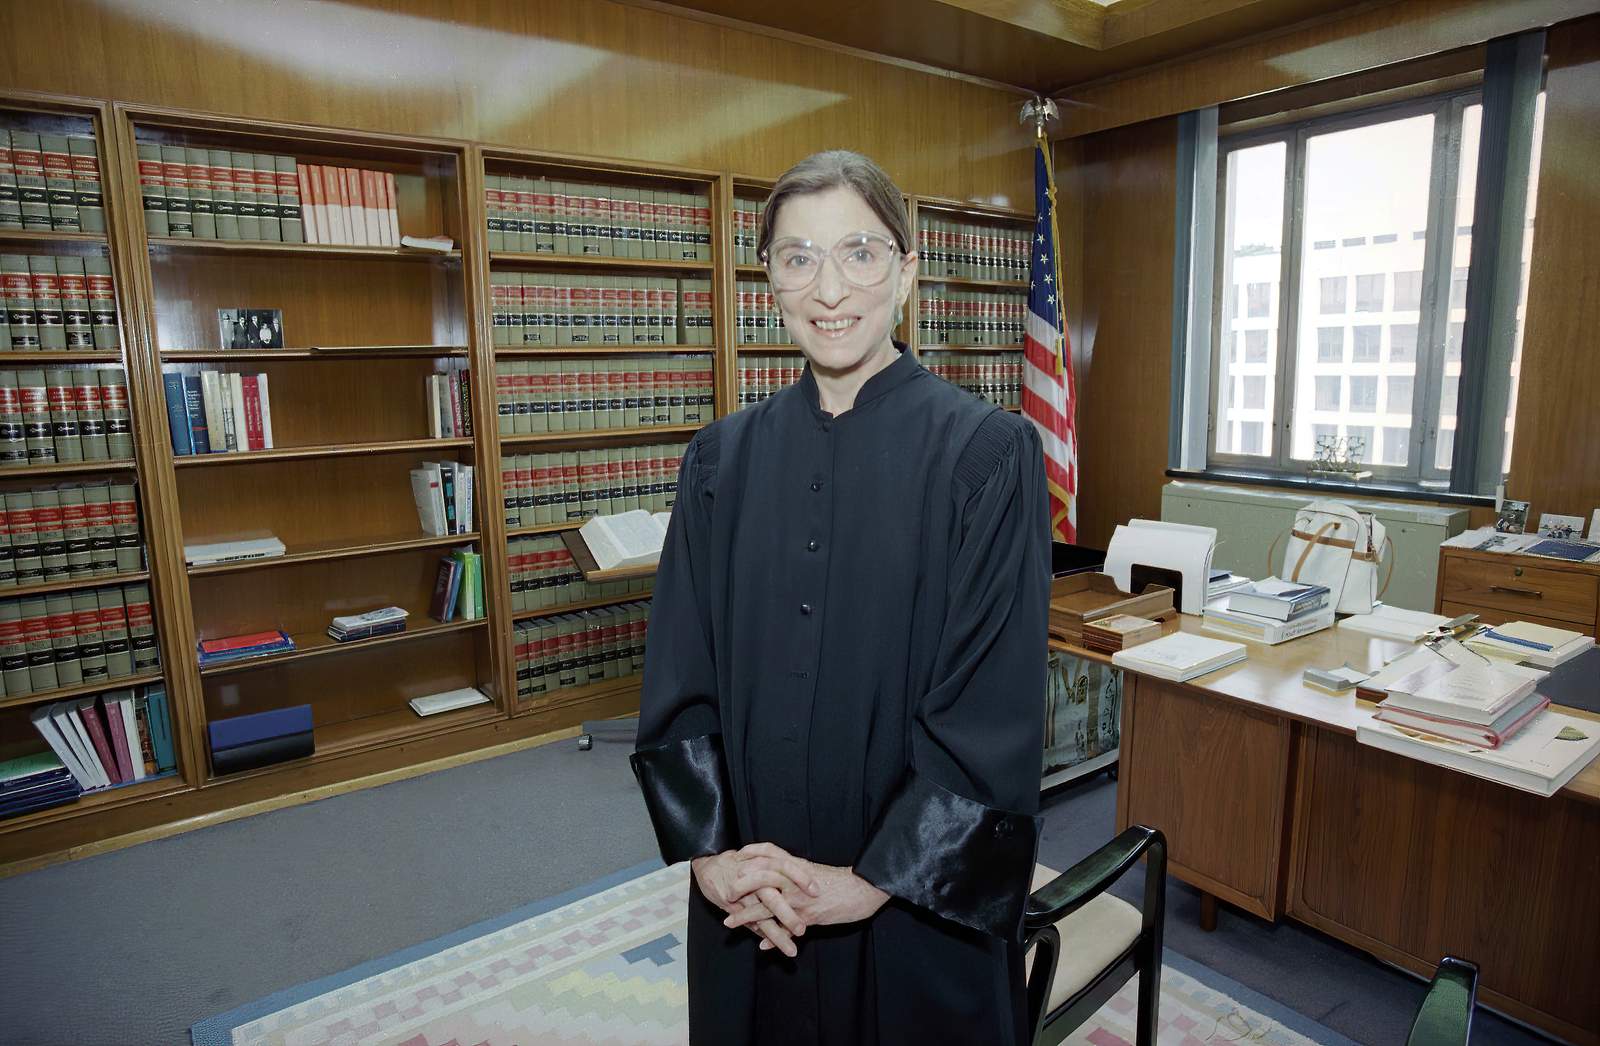 Media celebrates Justice Ruth Bader Ginsburg's life, legacy